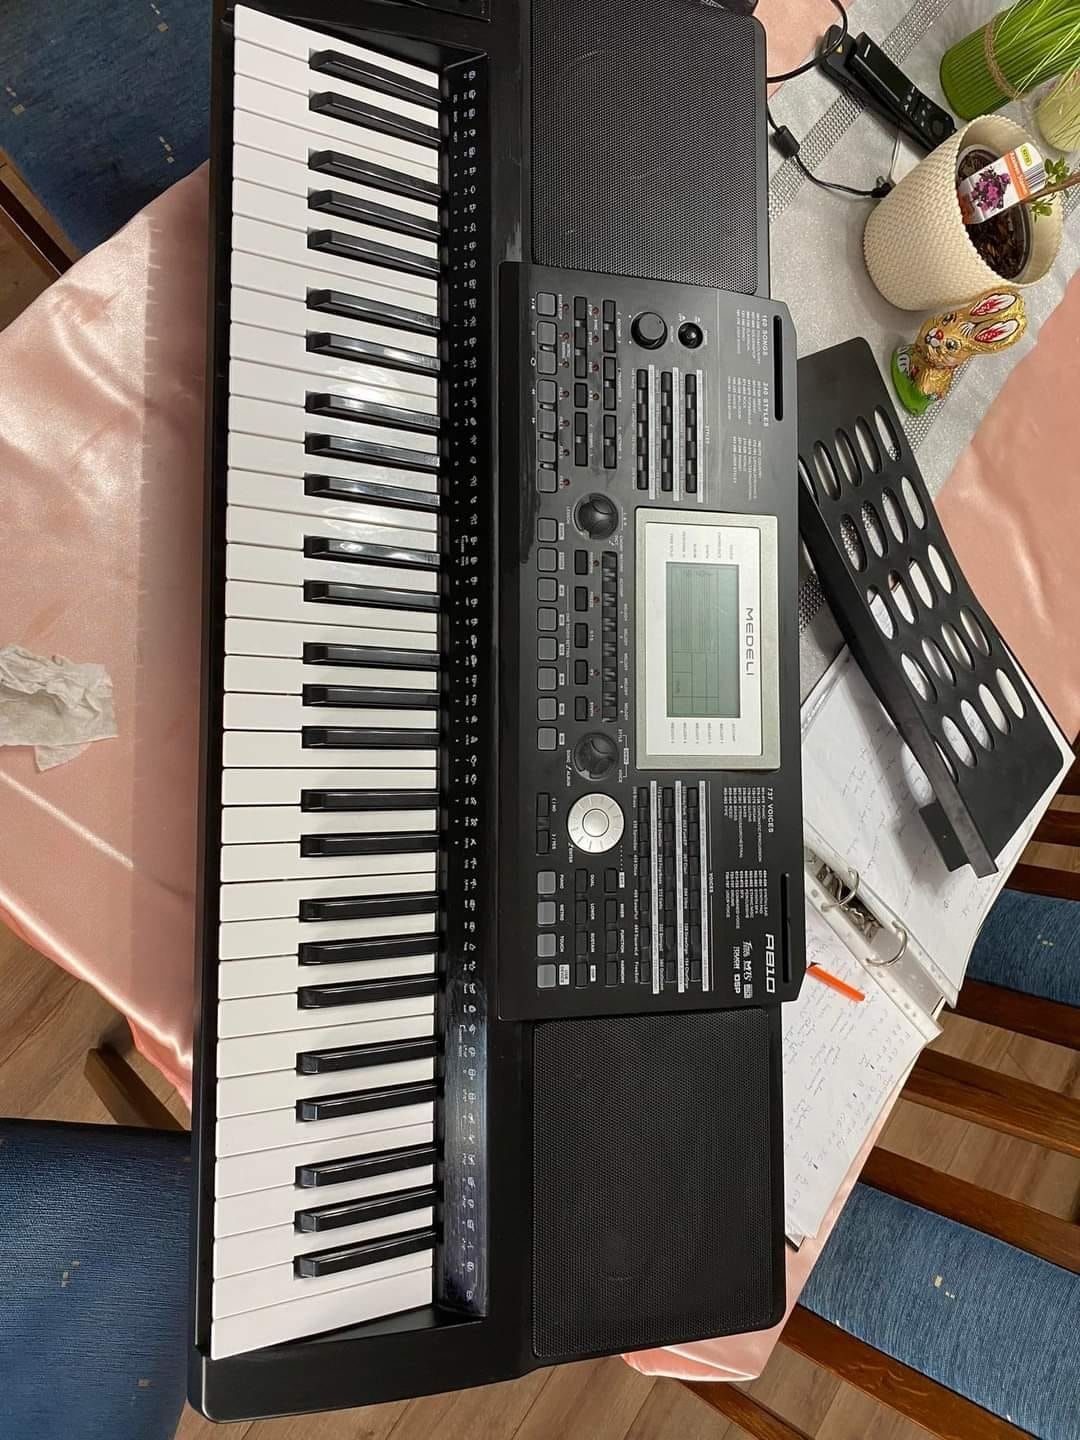 Keyboard     .             .